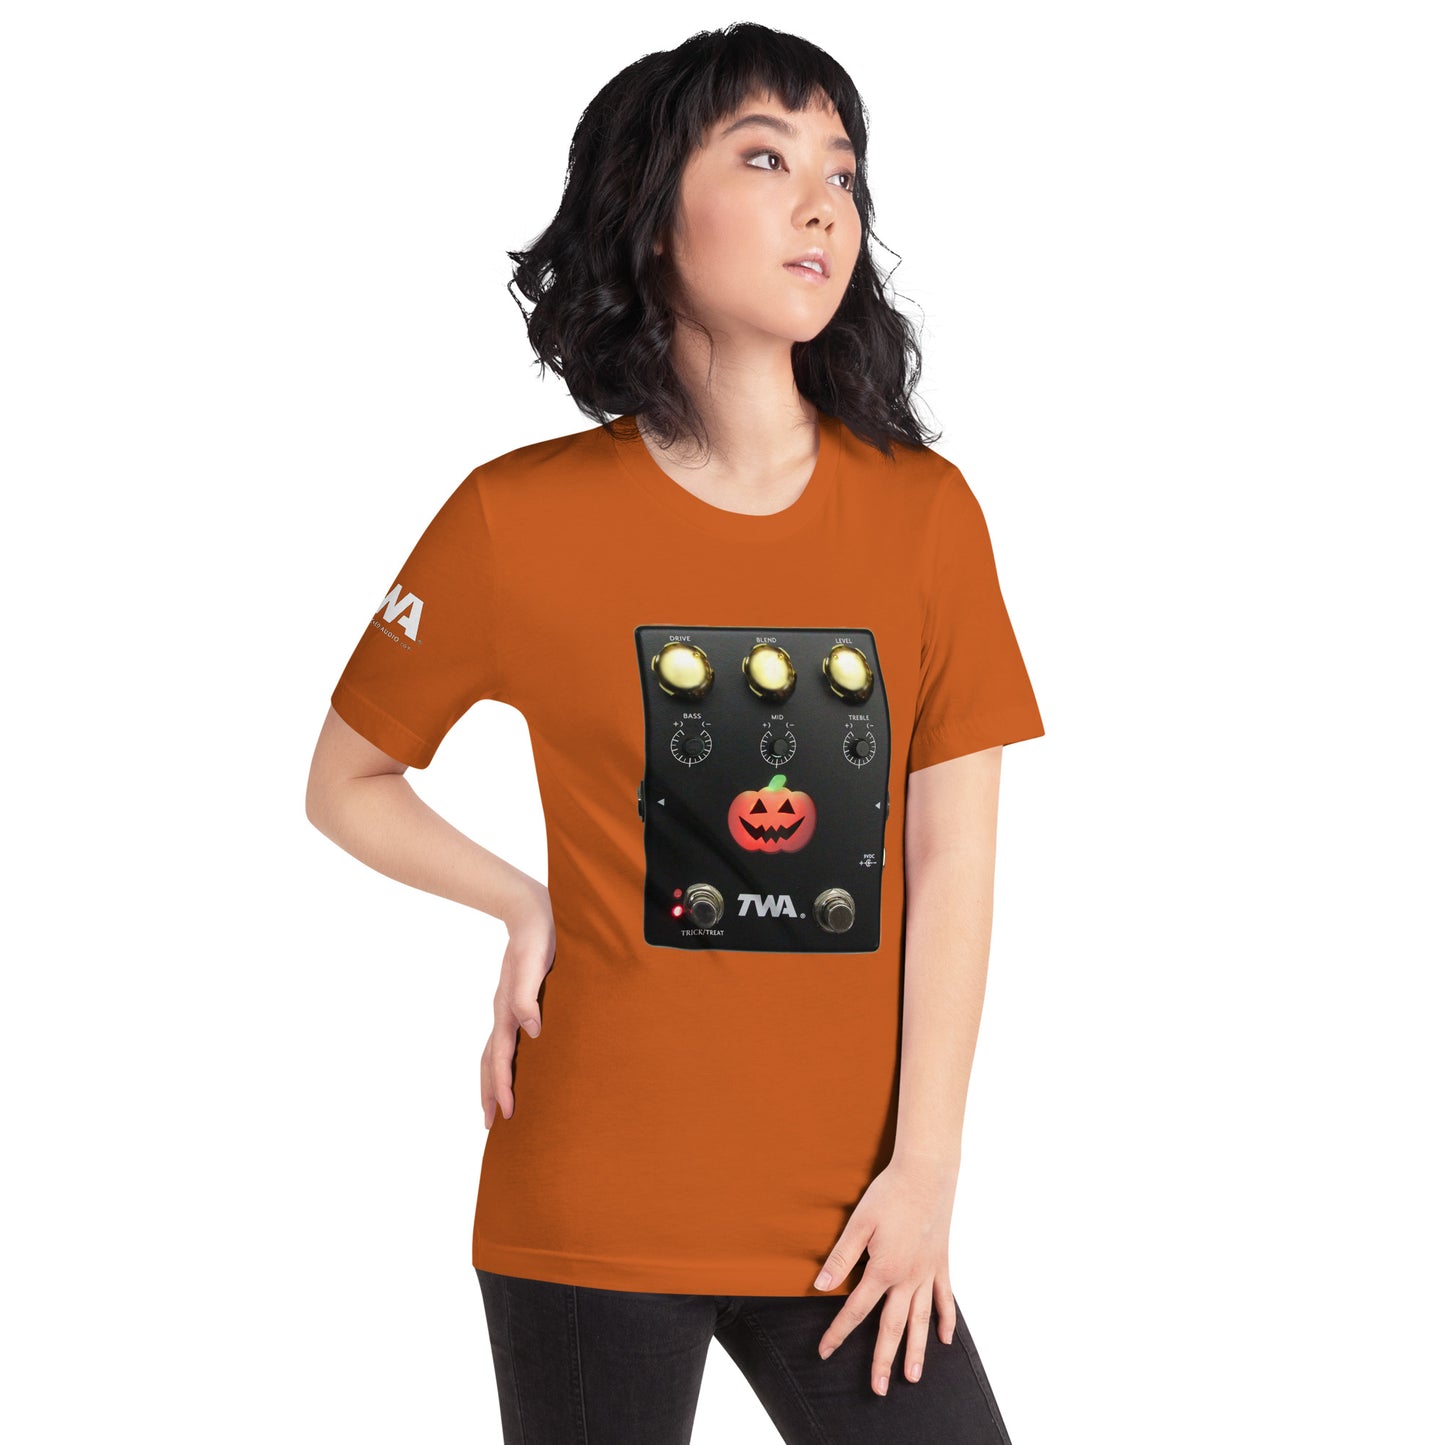 TWA Octoverdrive pedal t-shirt